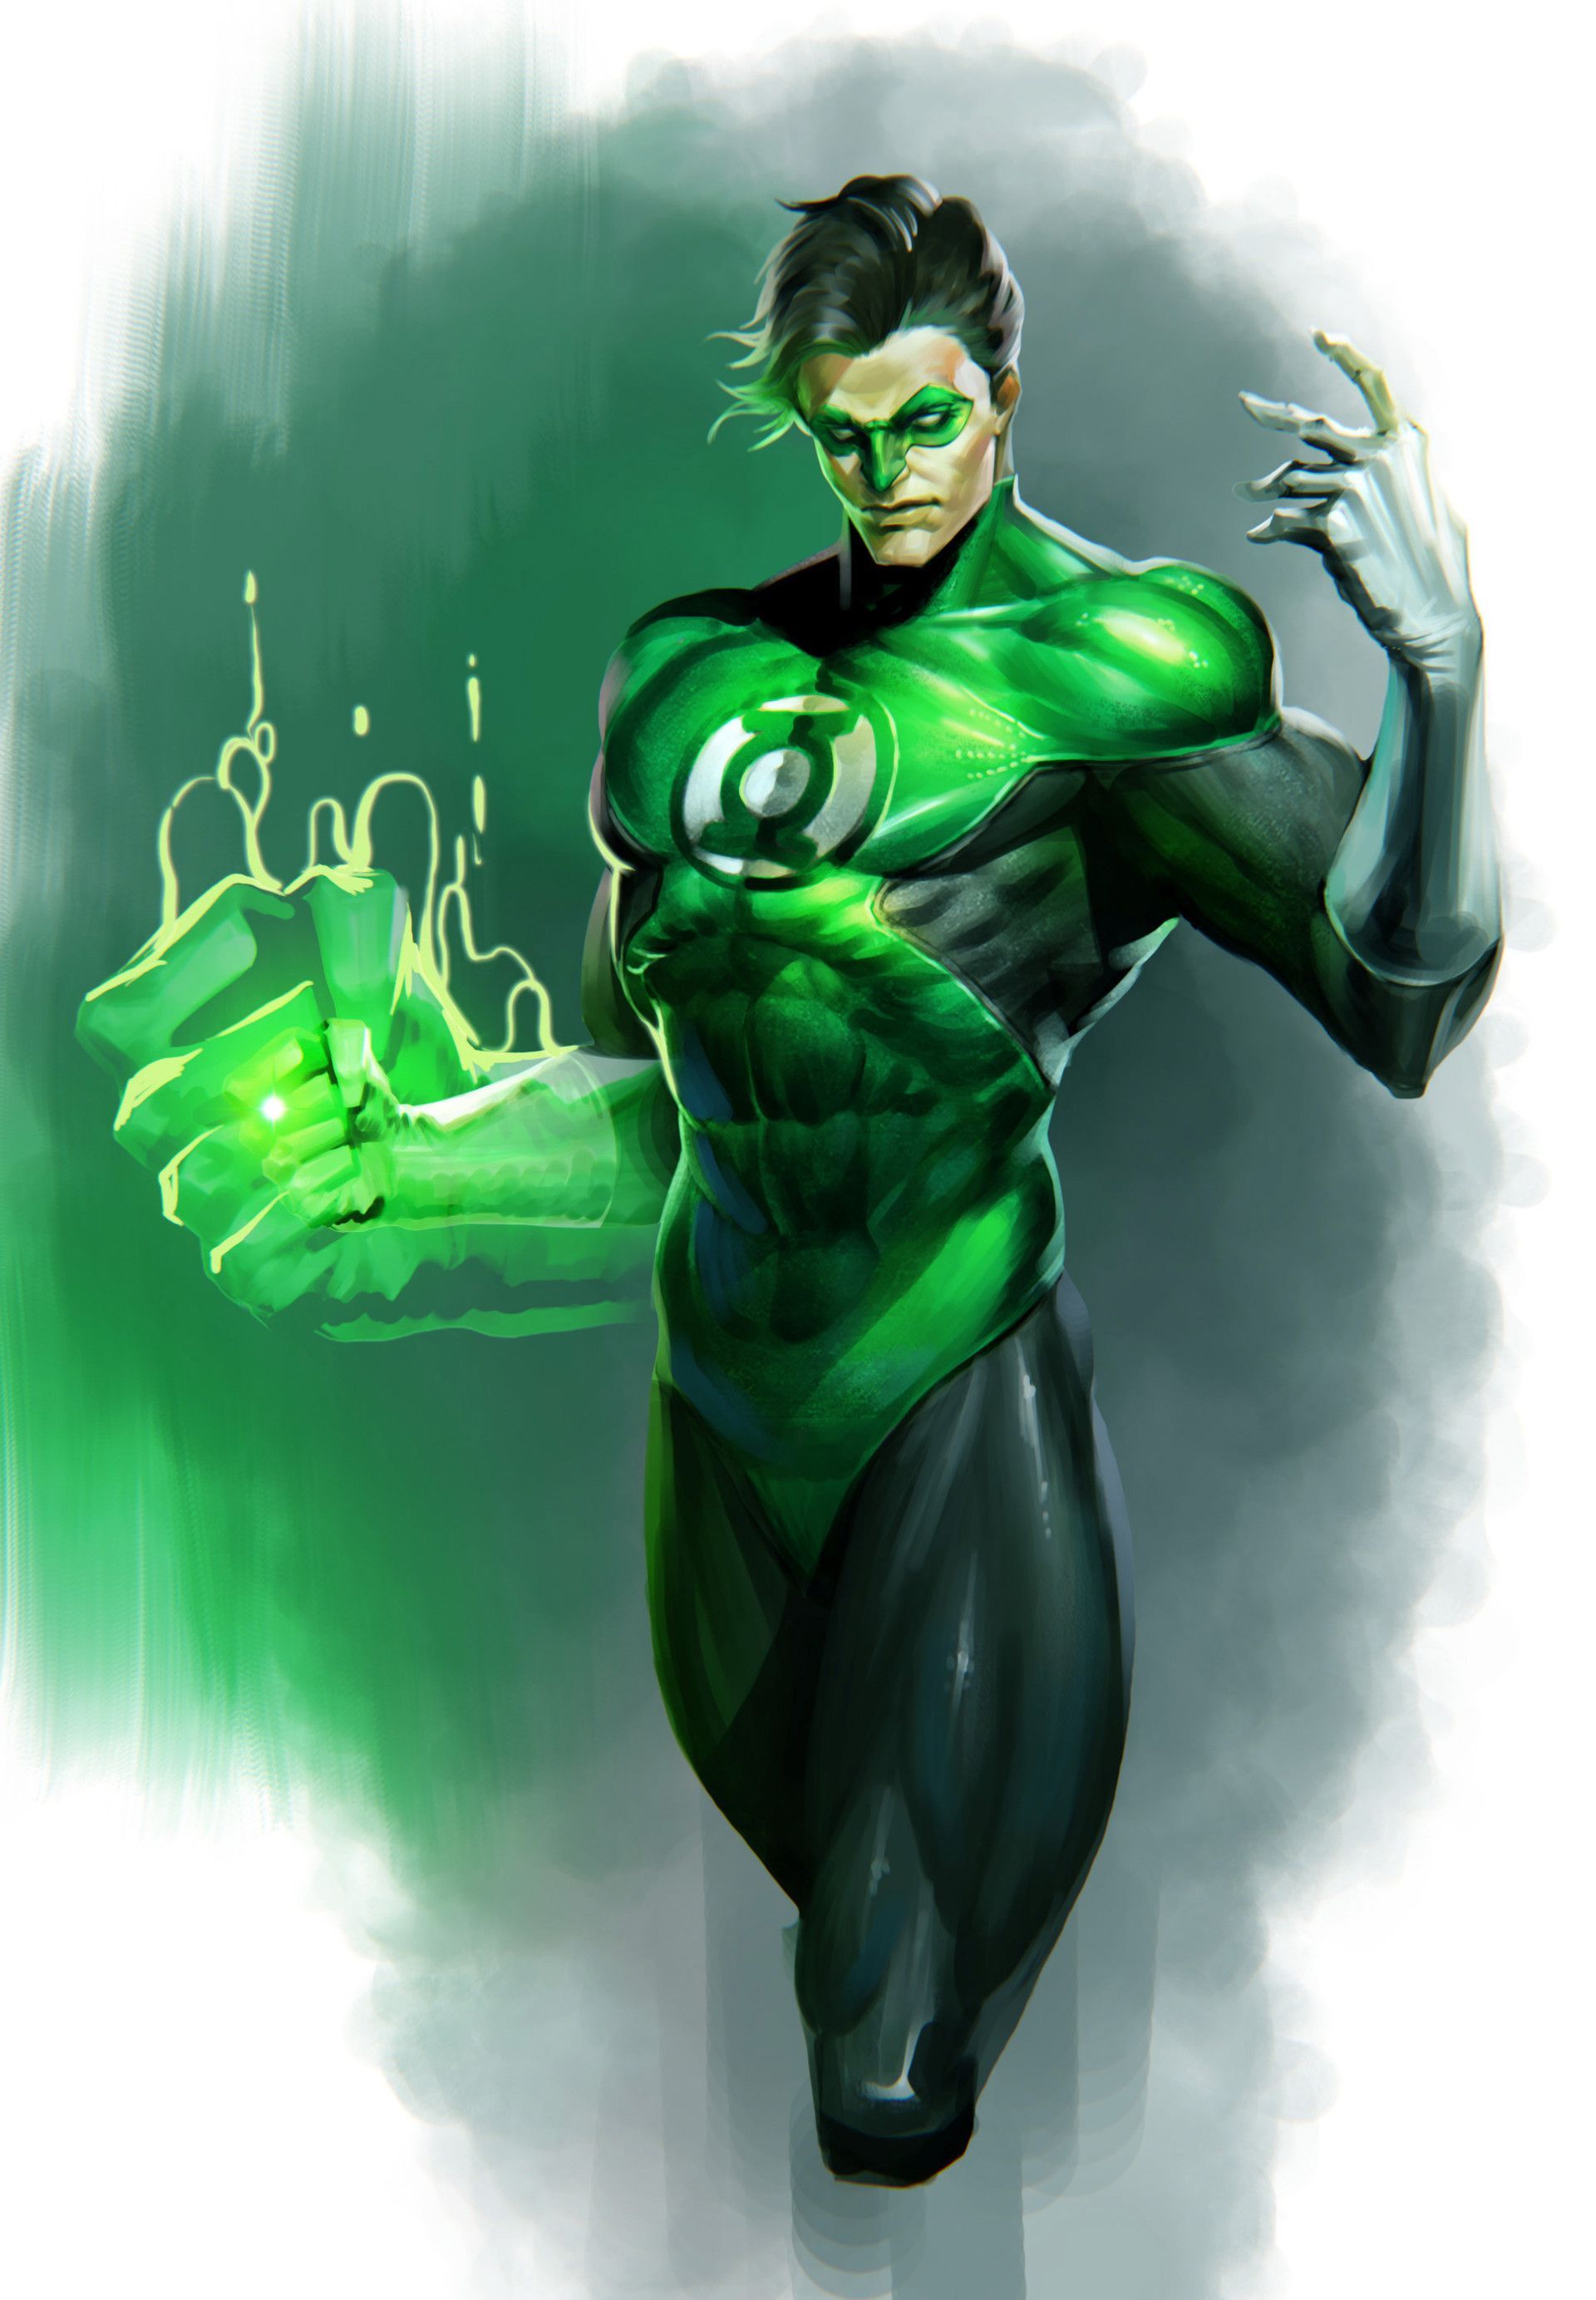 Green Lantern Fan Art, 재문 윤. Green lantern wallpaper, Green lantern comics, Green lantern corps